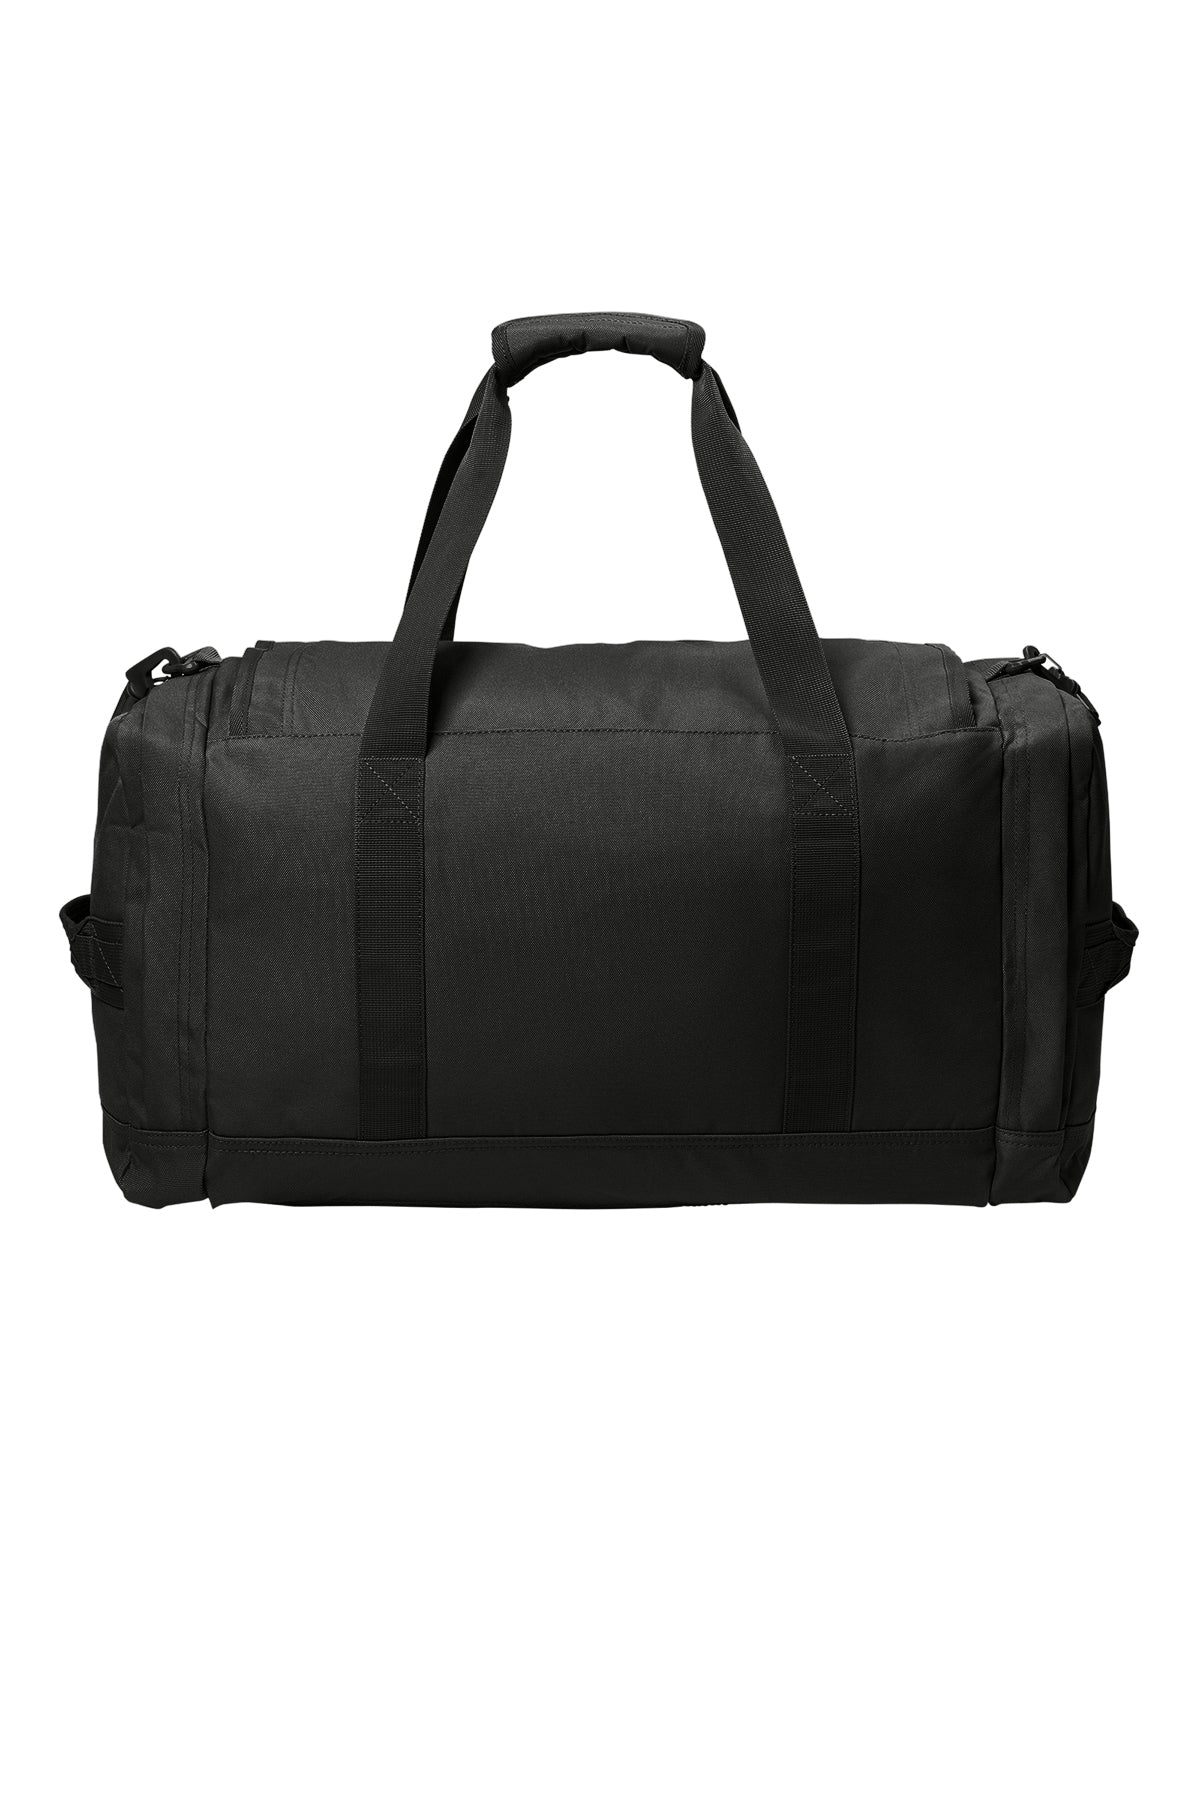 CornerStone Tactical Duffel Bag